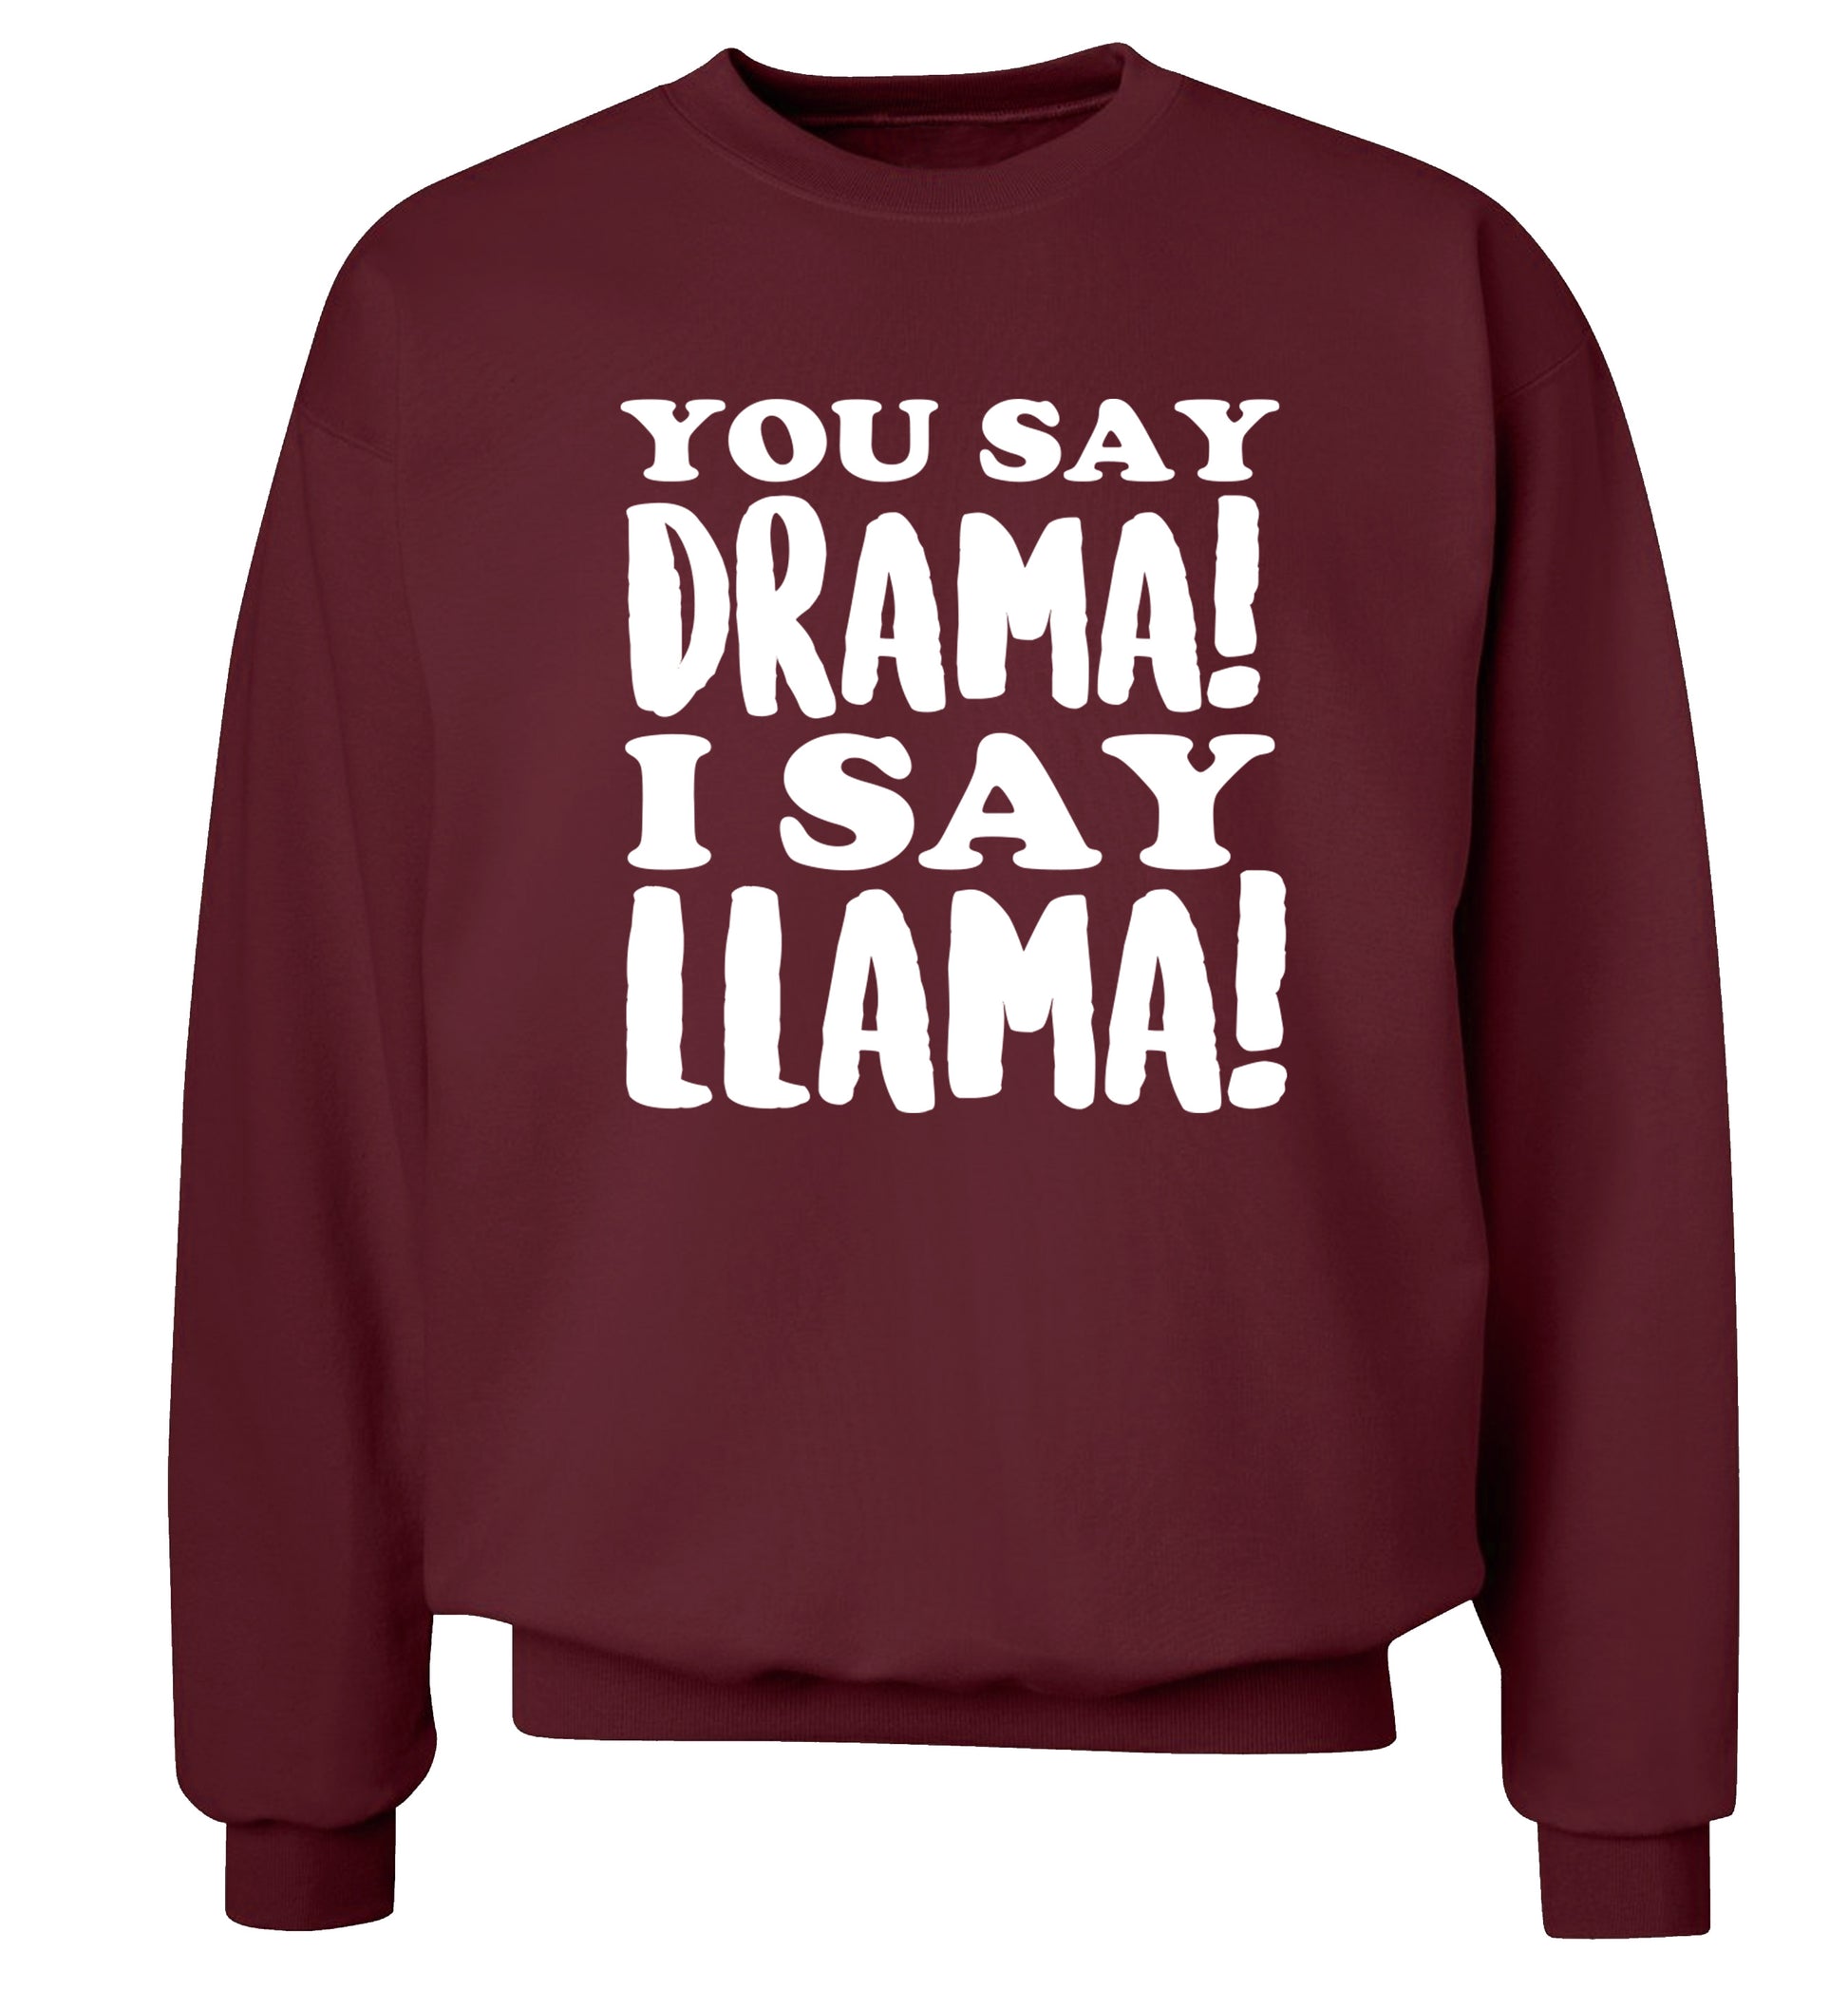 You say drama I say llama! Adult's unisex maroon Sweater 2XL